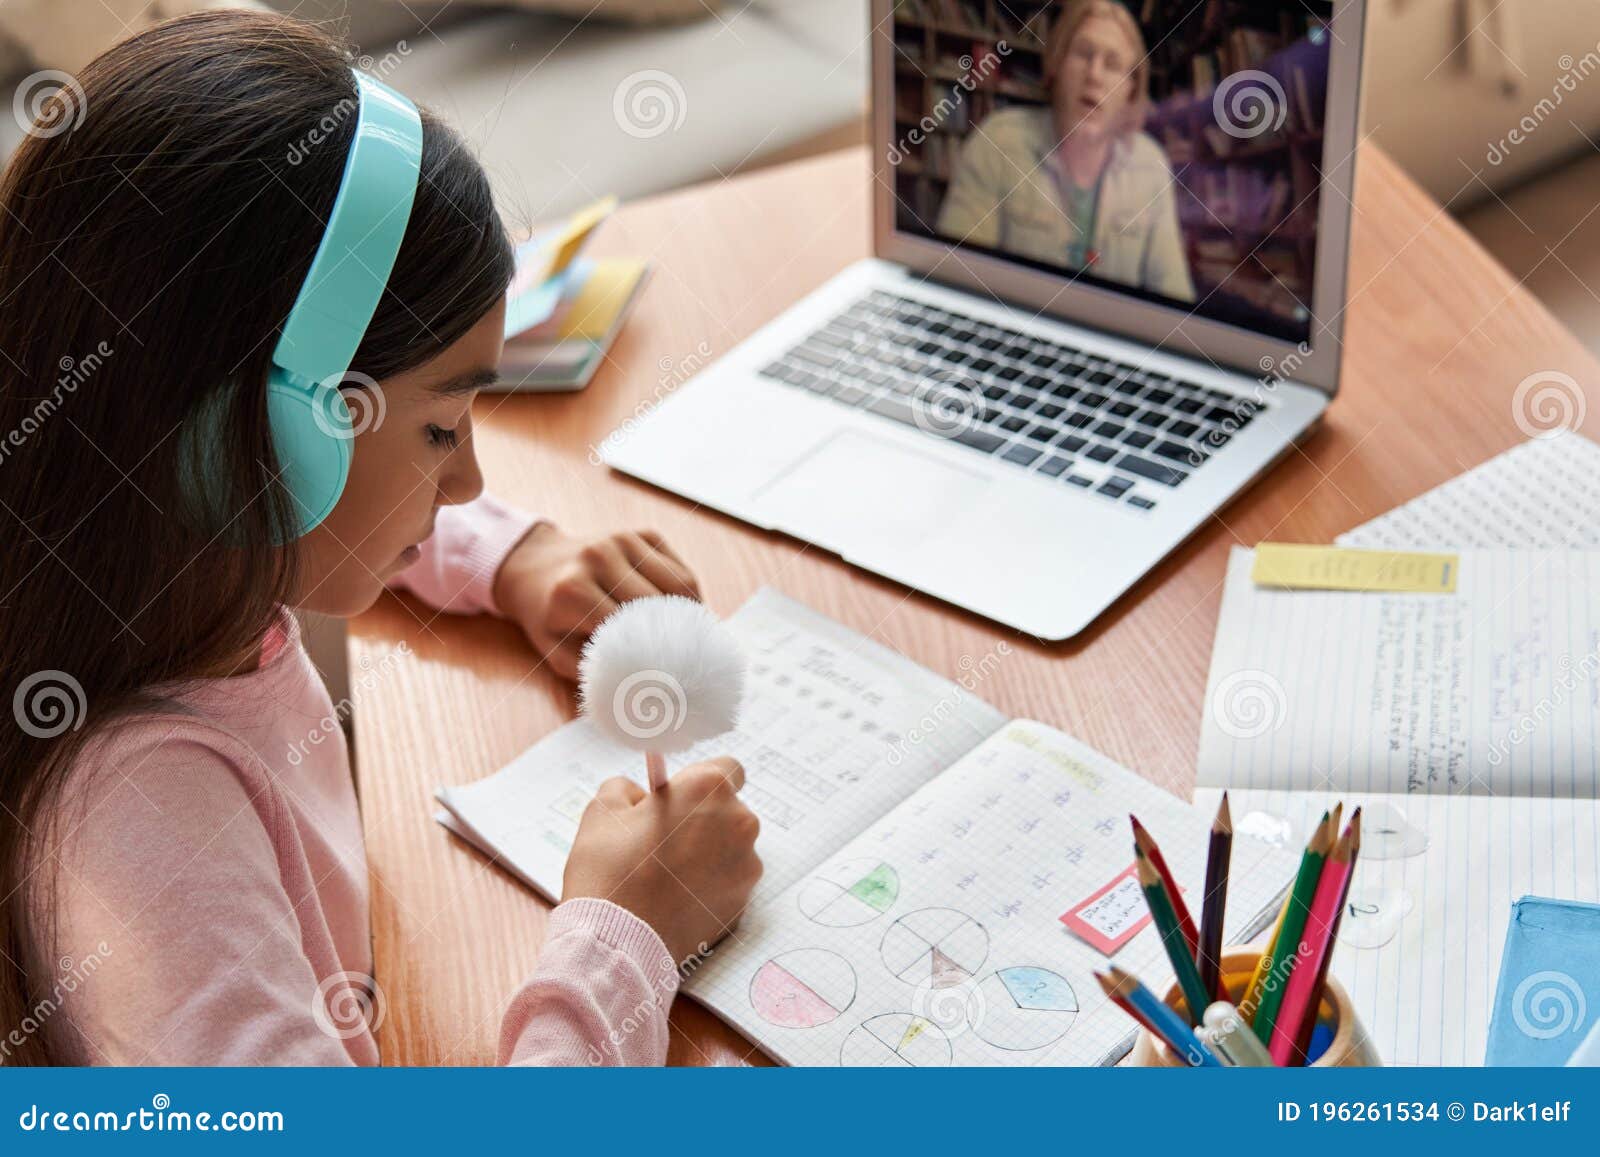 Indian School Girlsxxx Video - Indian School Girl Learn Online Video Calling Math Teacher, Over Shoulder.  Stock Photo - Image of headphone, learn: 196261534